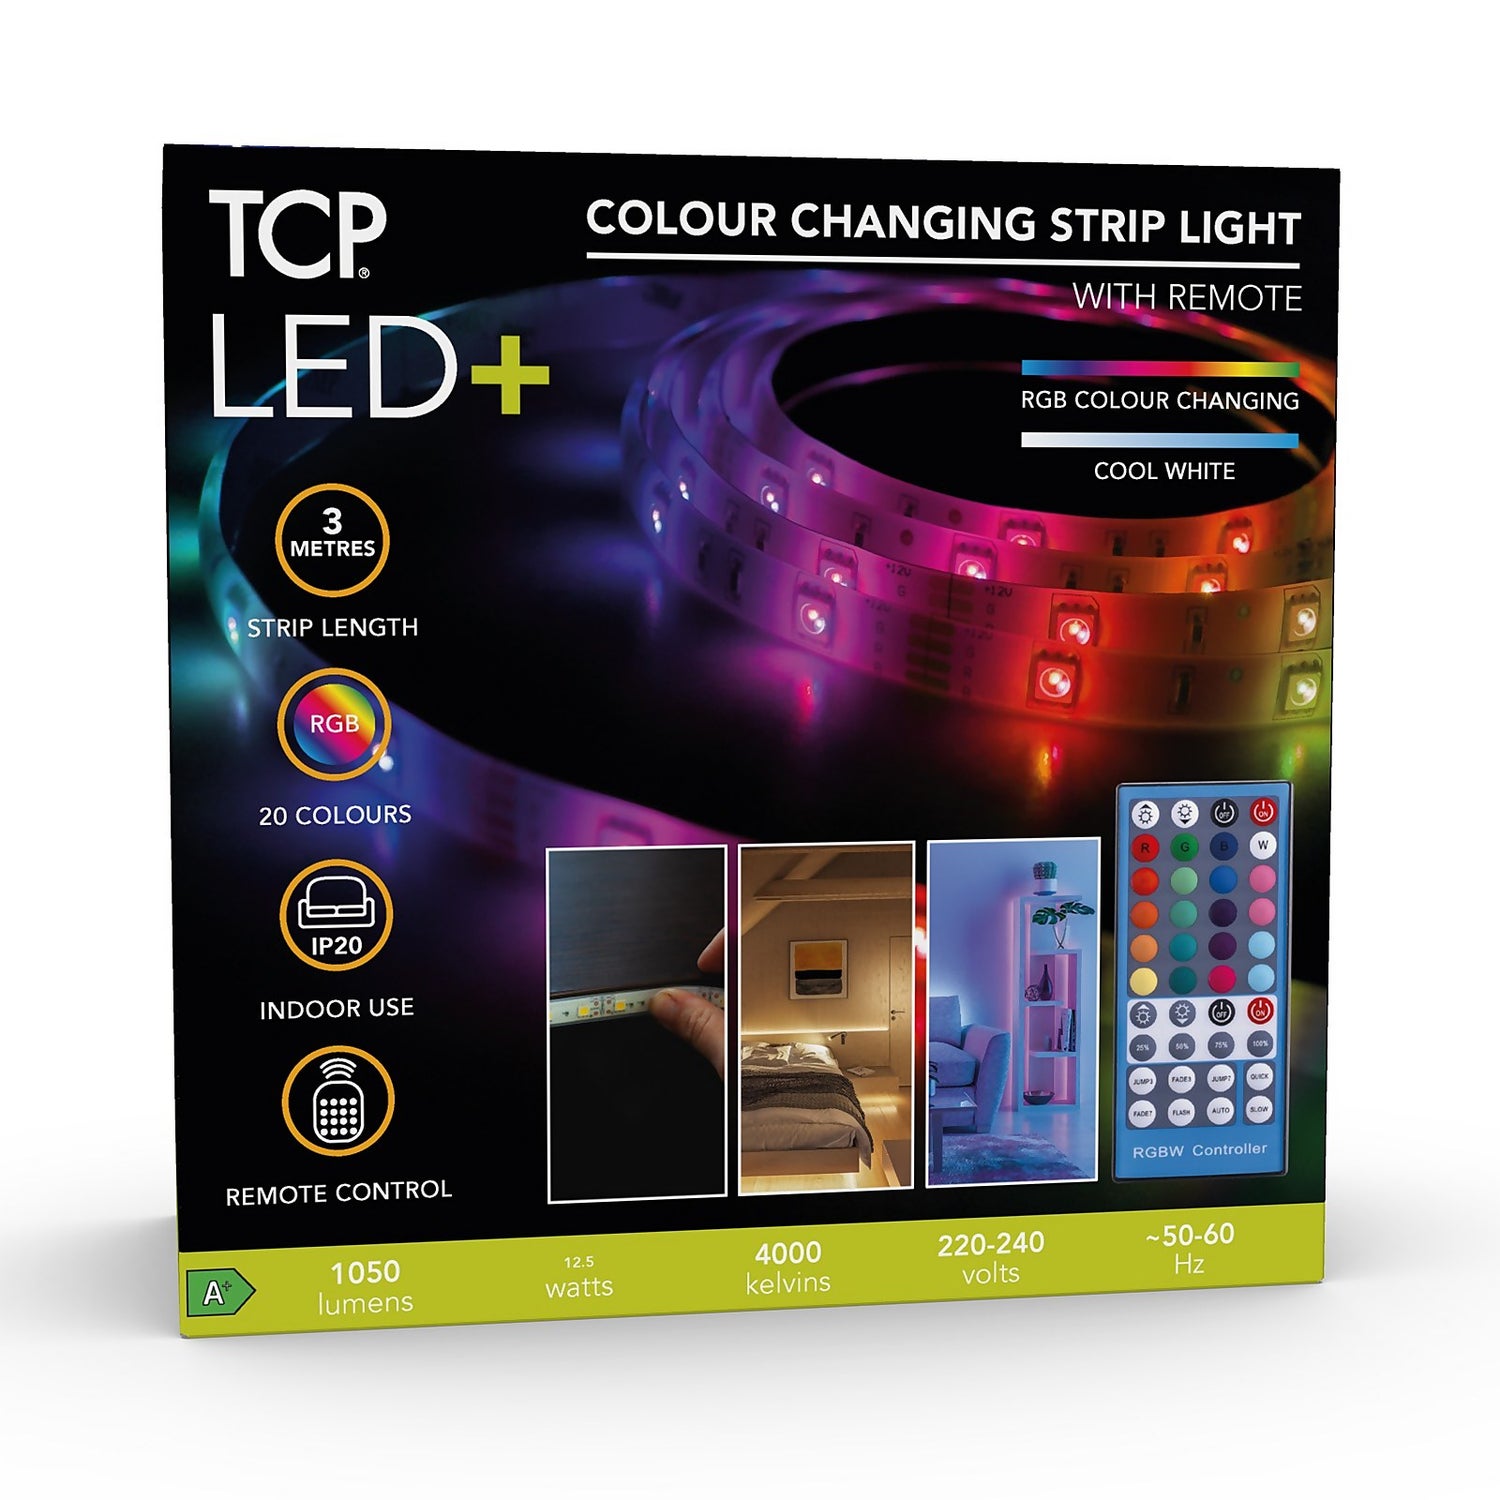 COB LED strip 756 LEDs/m DC12V RGB Flexible Led Strip High Density FOB  Light